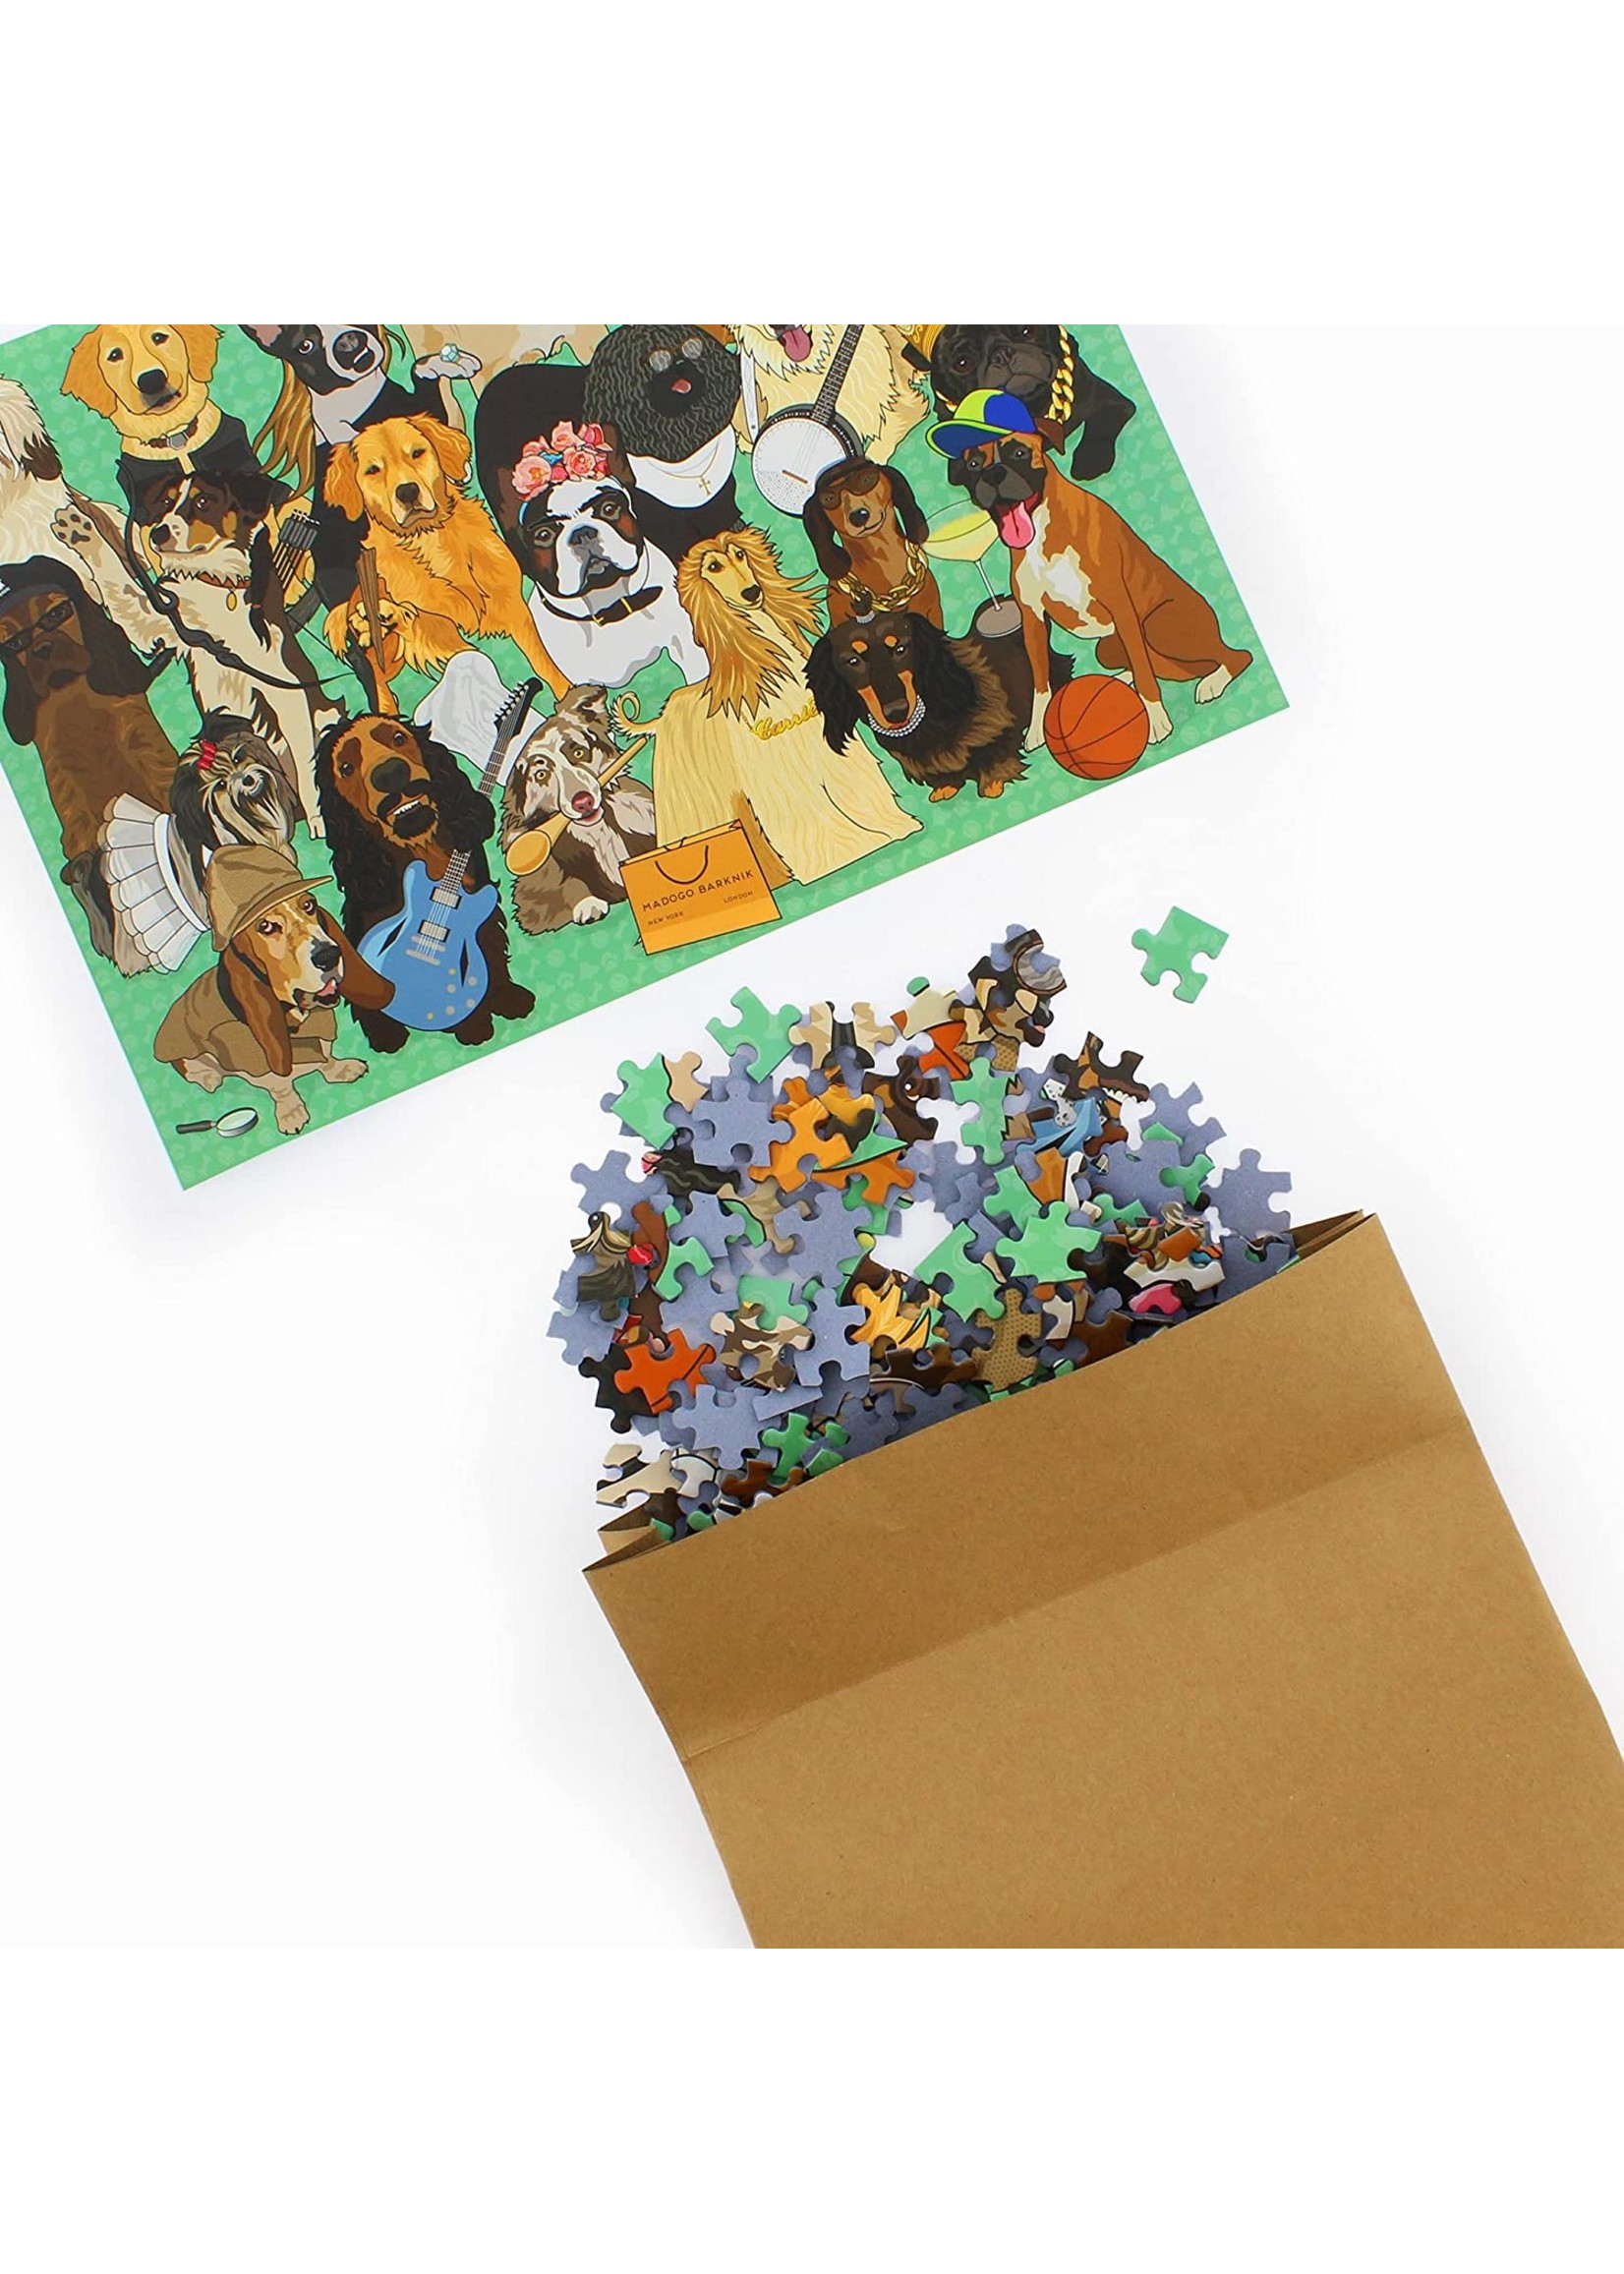 Paper Dogs 1000 Piece Puzzle